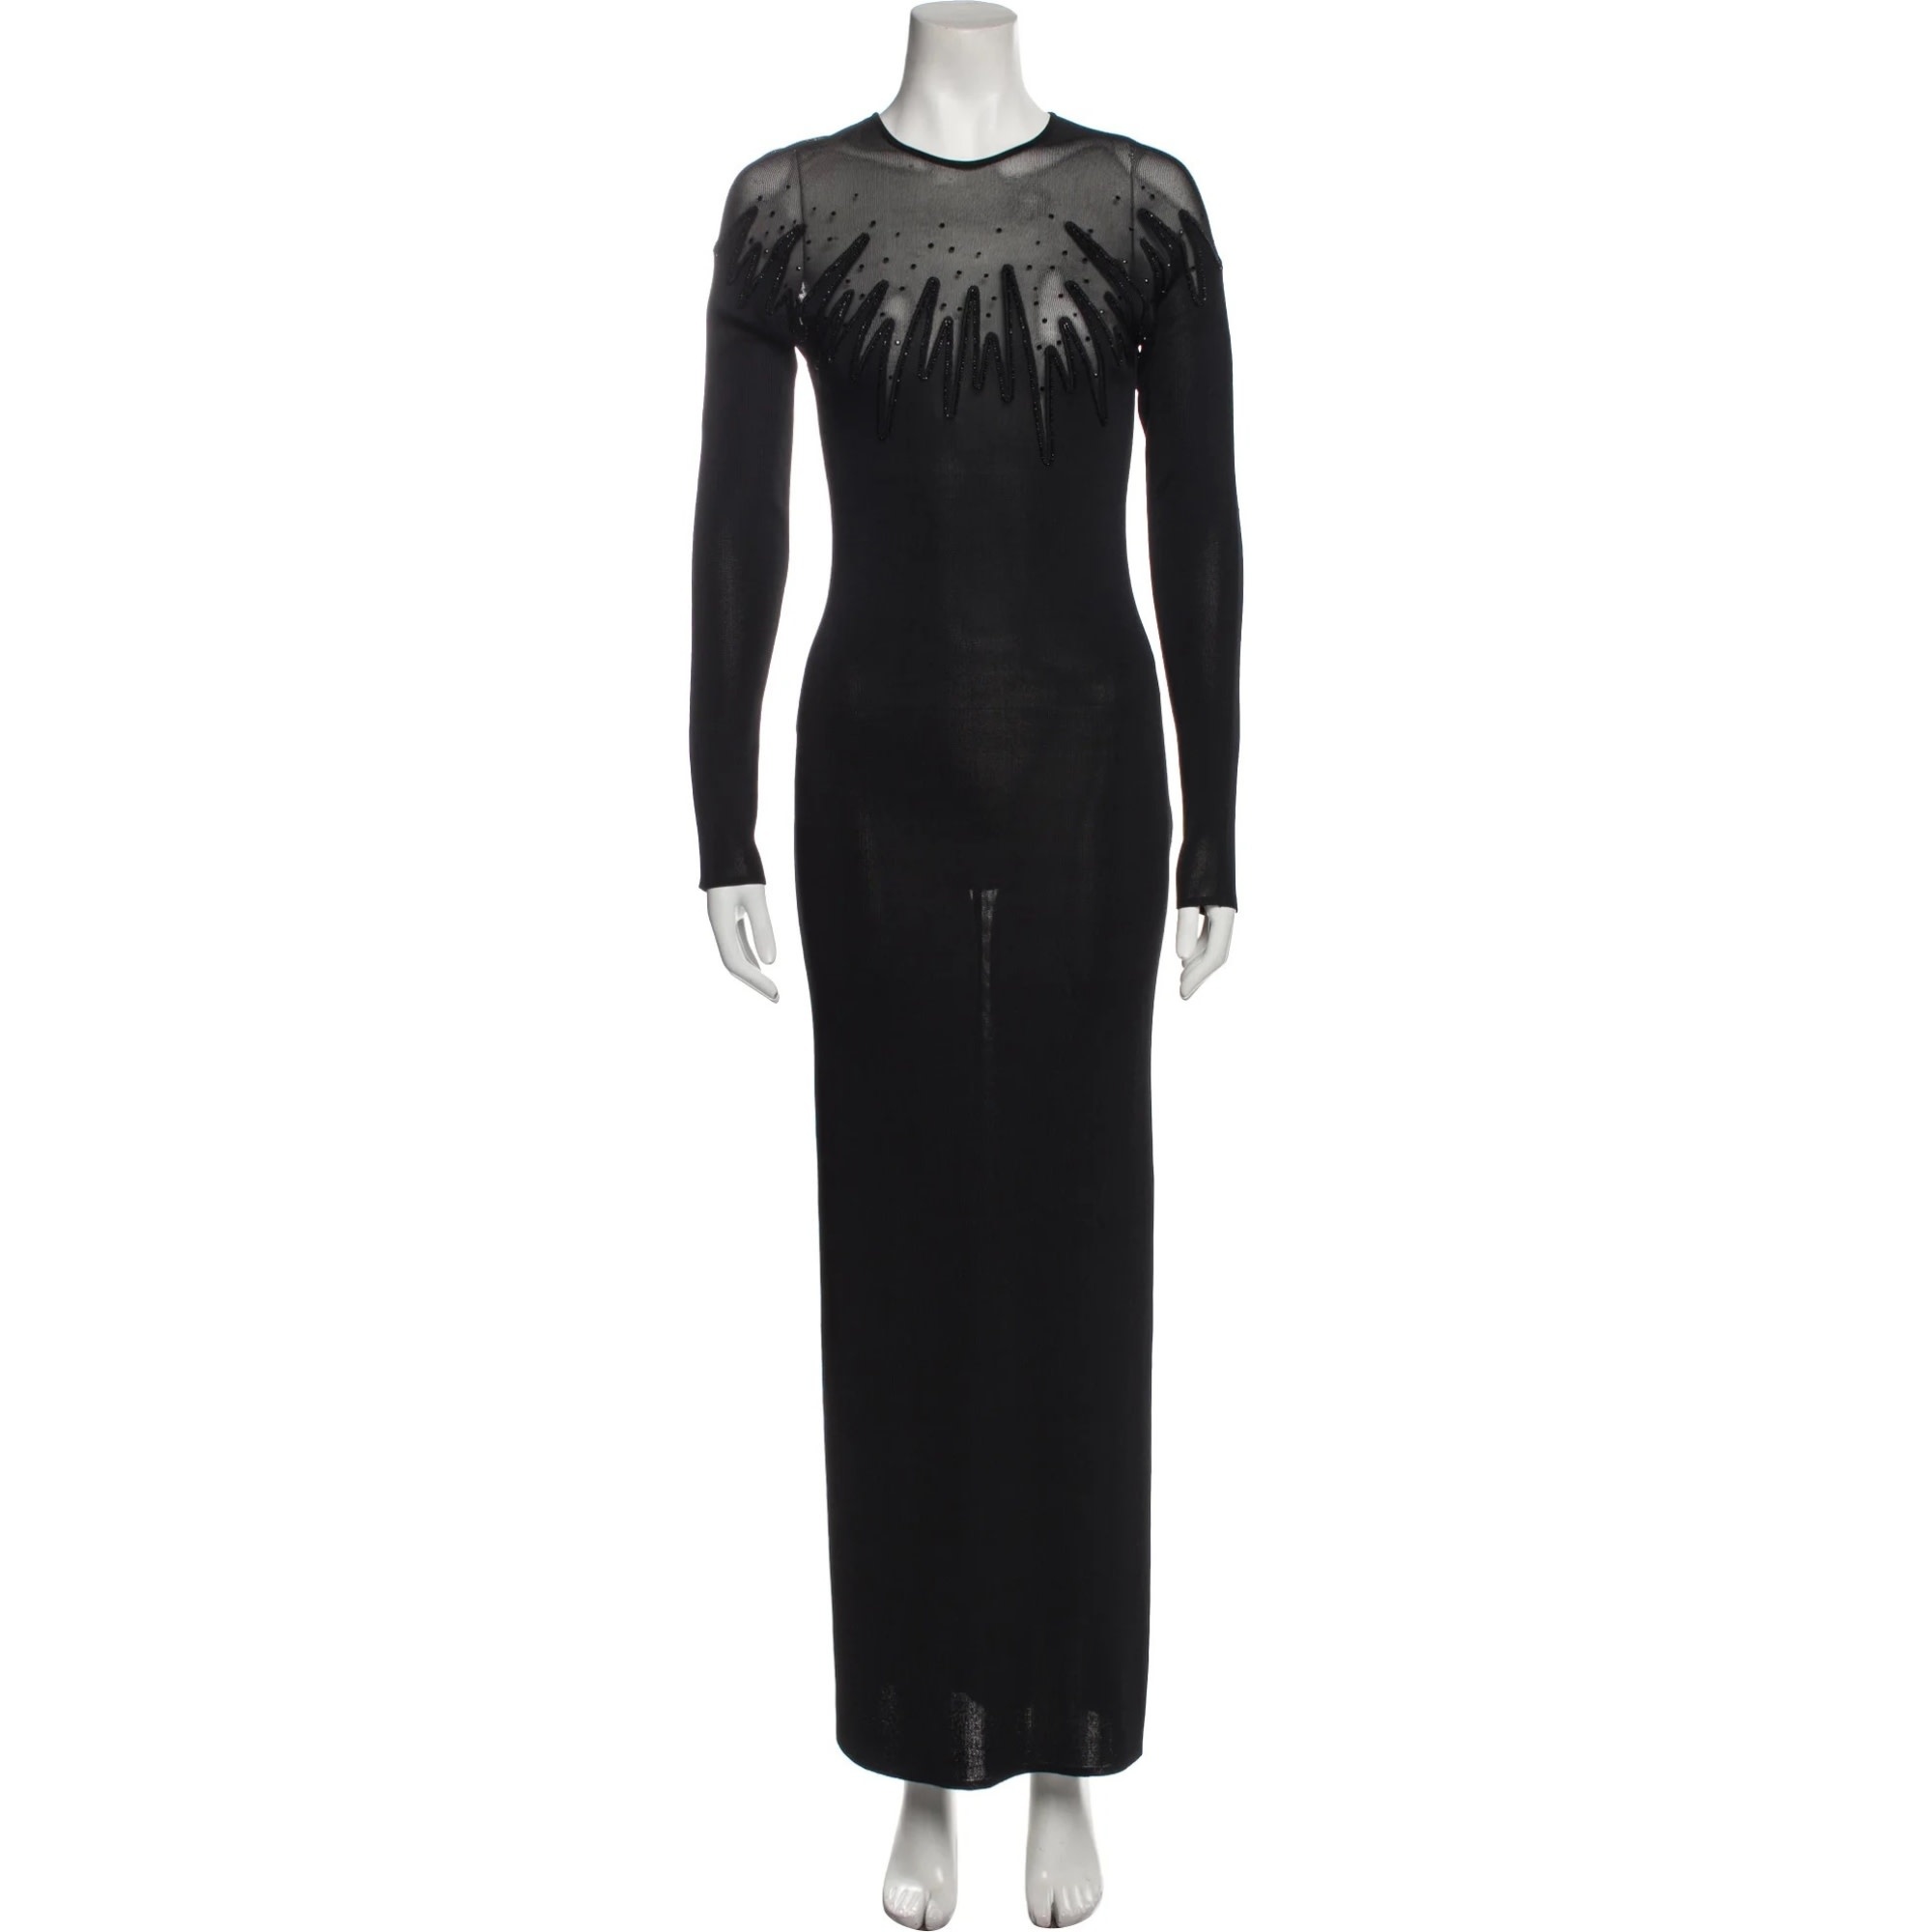 THIERRY MUGLER VINTAGE EMBELLISHED BLACK LONG DRESS (XS)